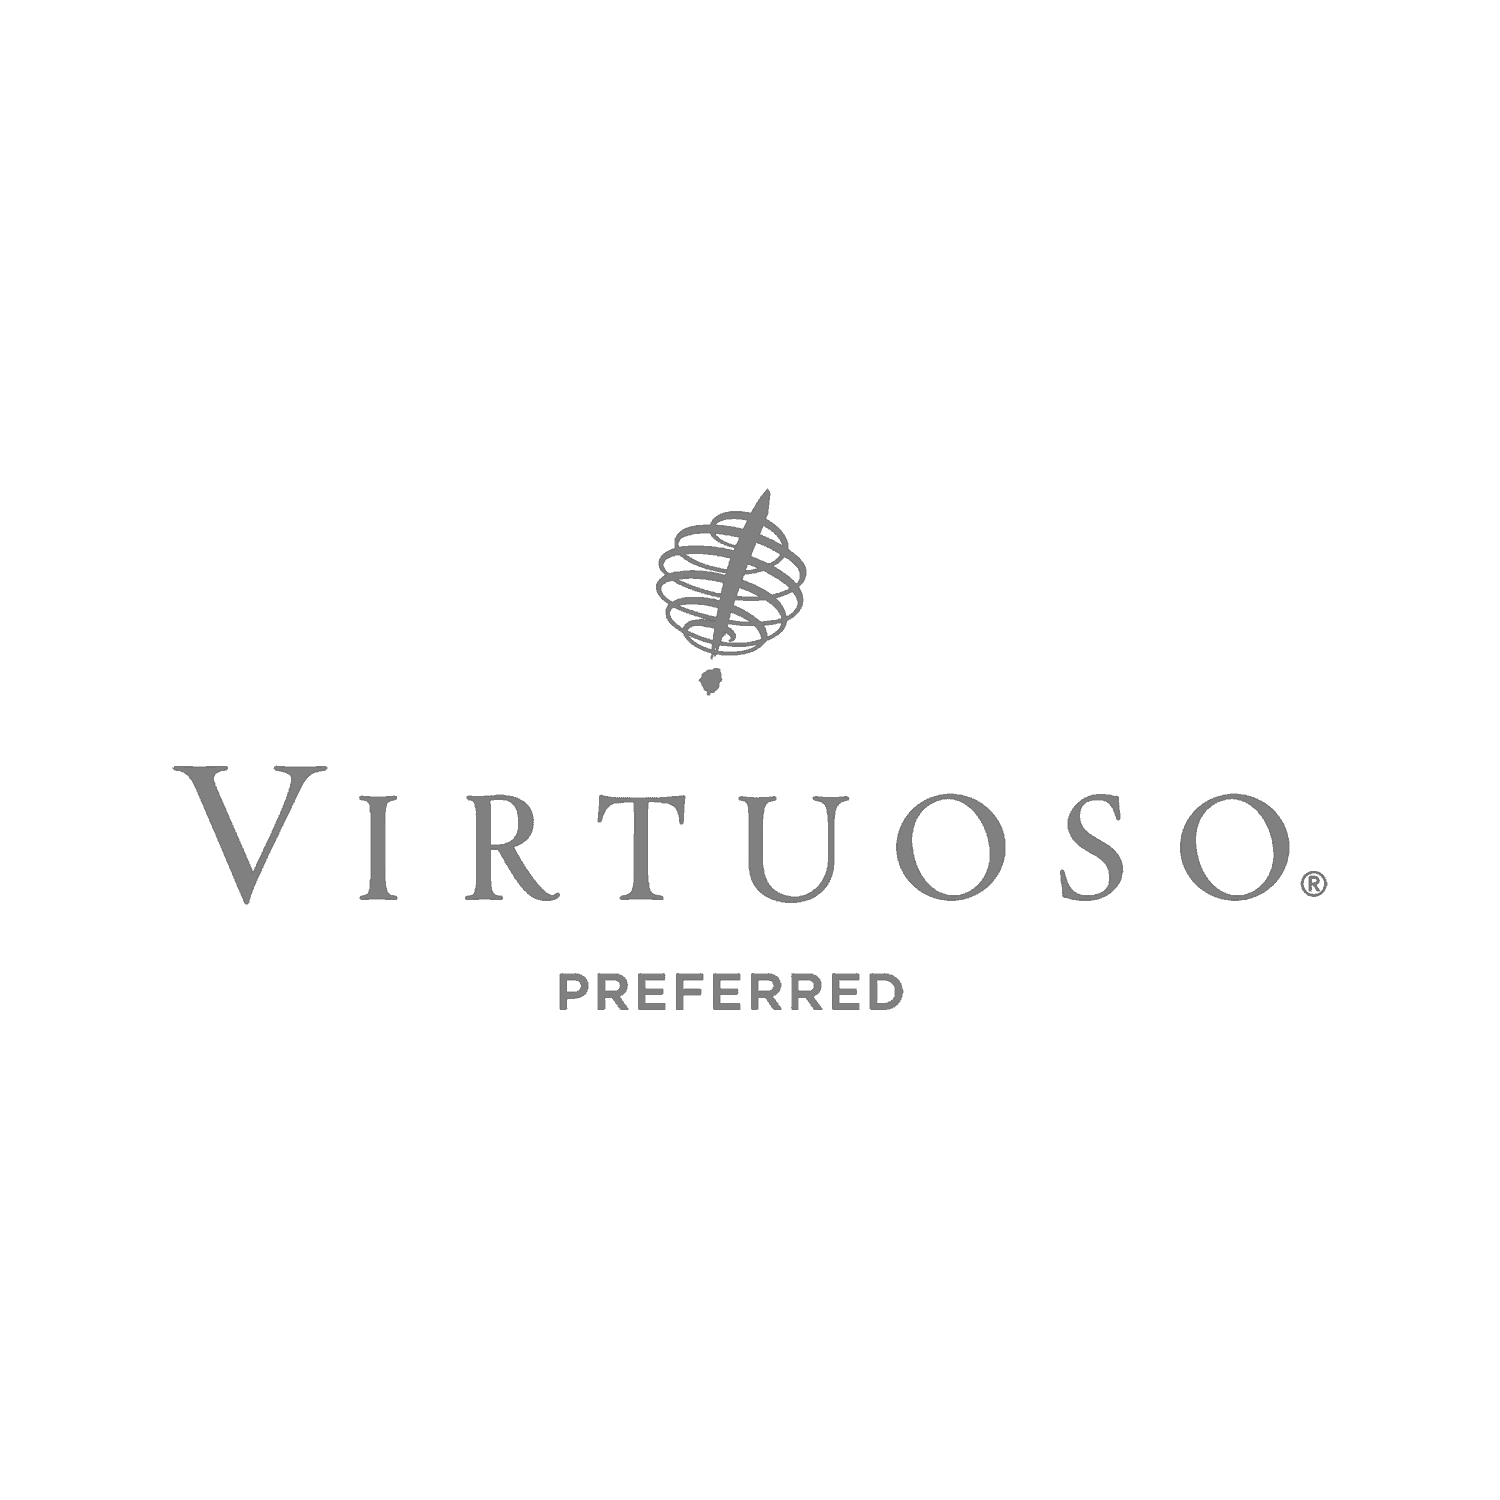 Das Logo von Virtuoso